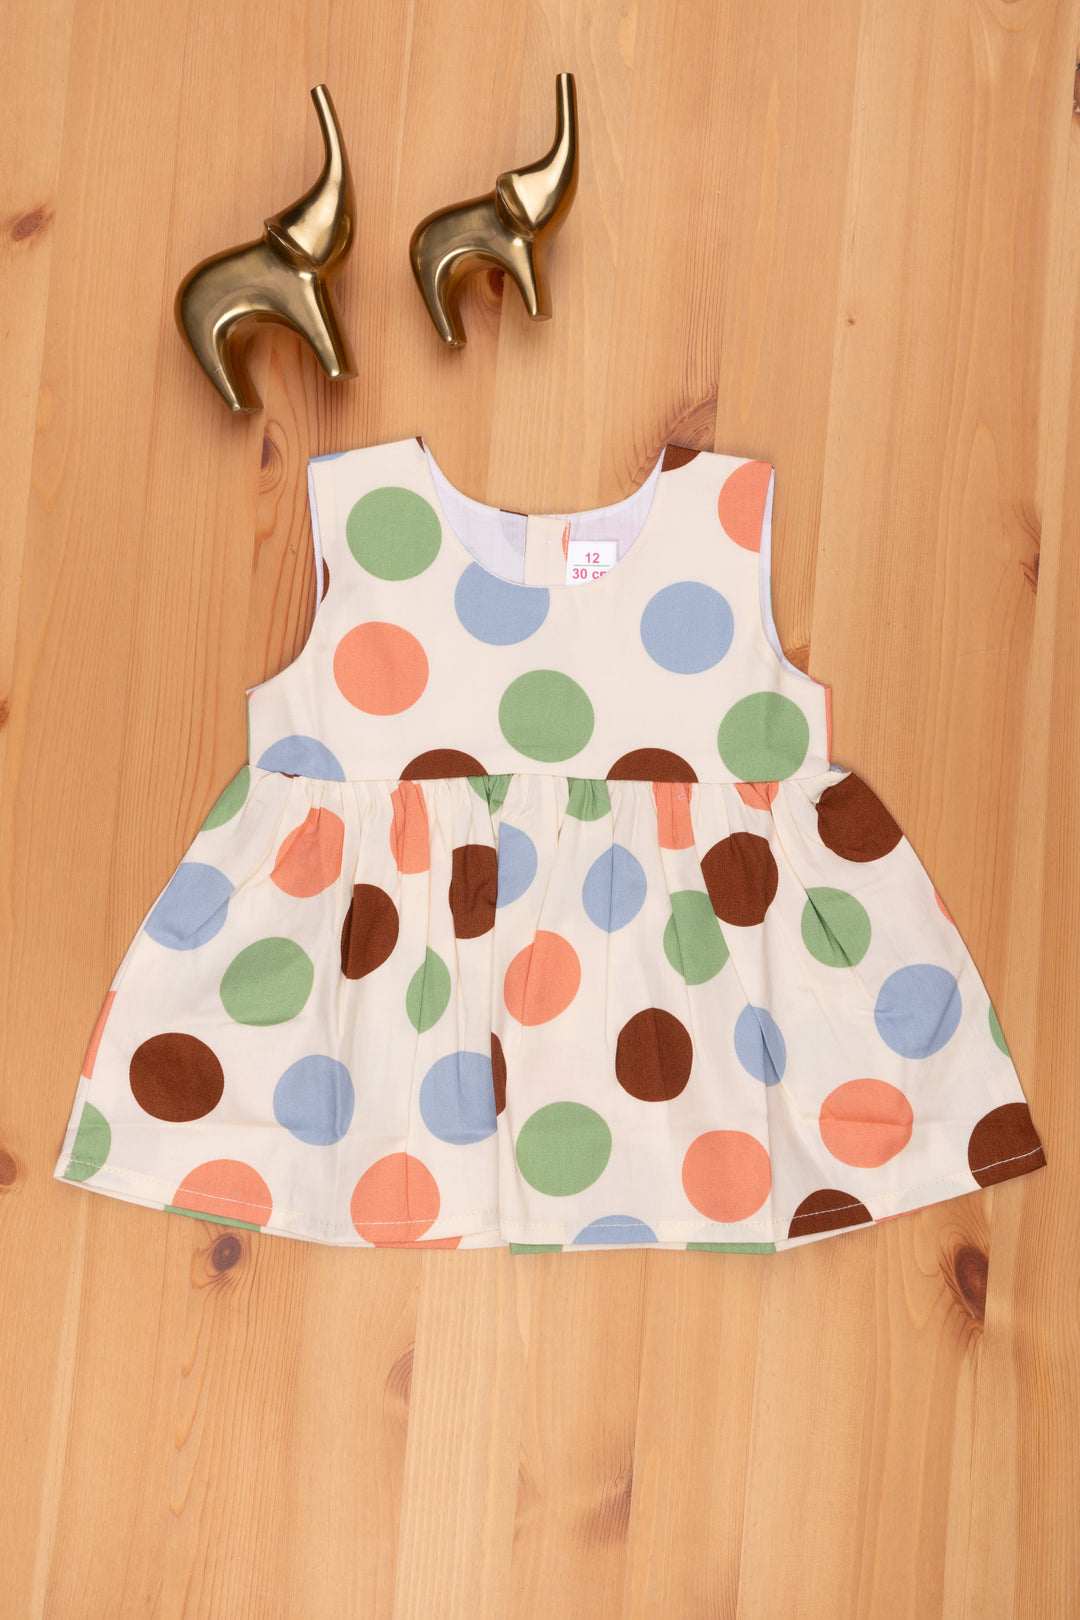 The Nesavu Baby Frock / Jhabla Sophisticated Beige Polka Dot Dress for Little Girls Nesavu 12 (3M) / Yellow BFJ453D-12 Fancy Dresses For baby Girls | Buy Beige Baby Frocks online | The Nesavu